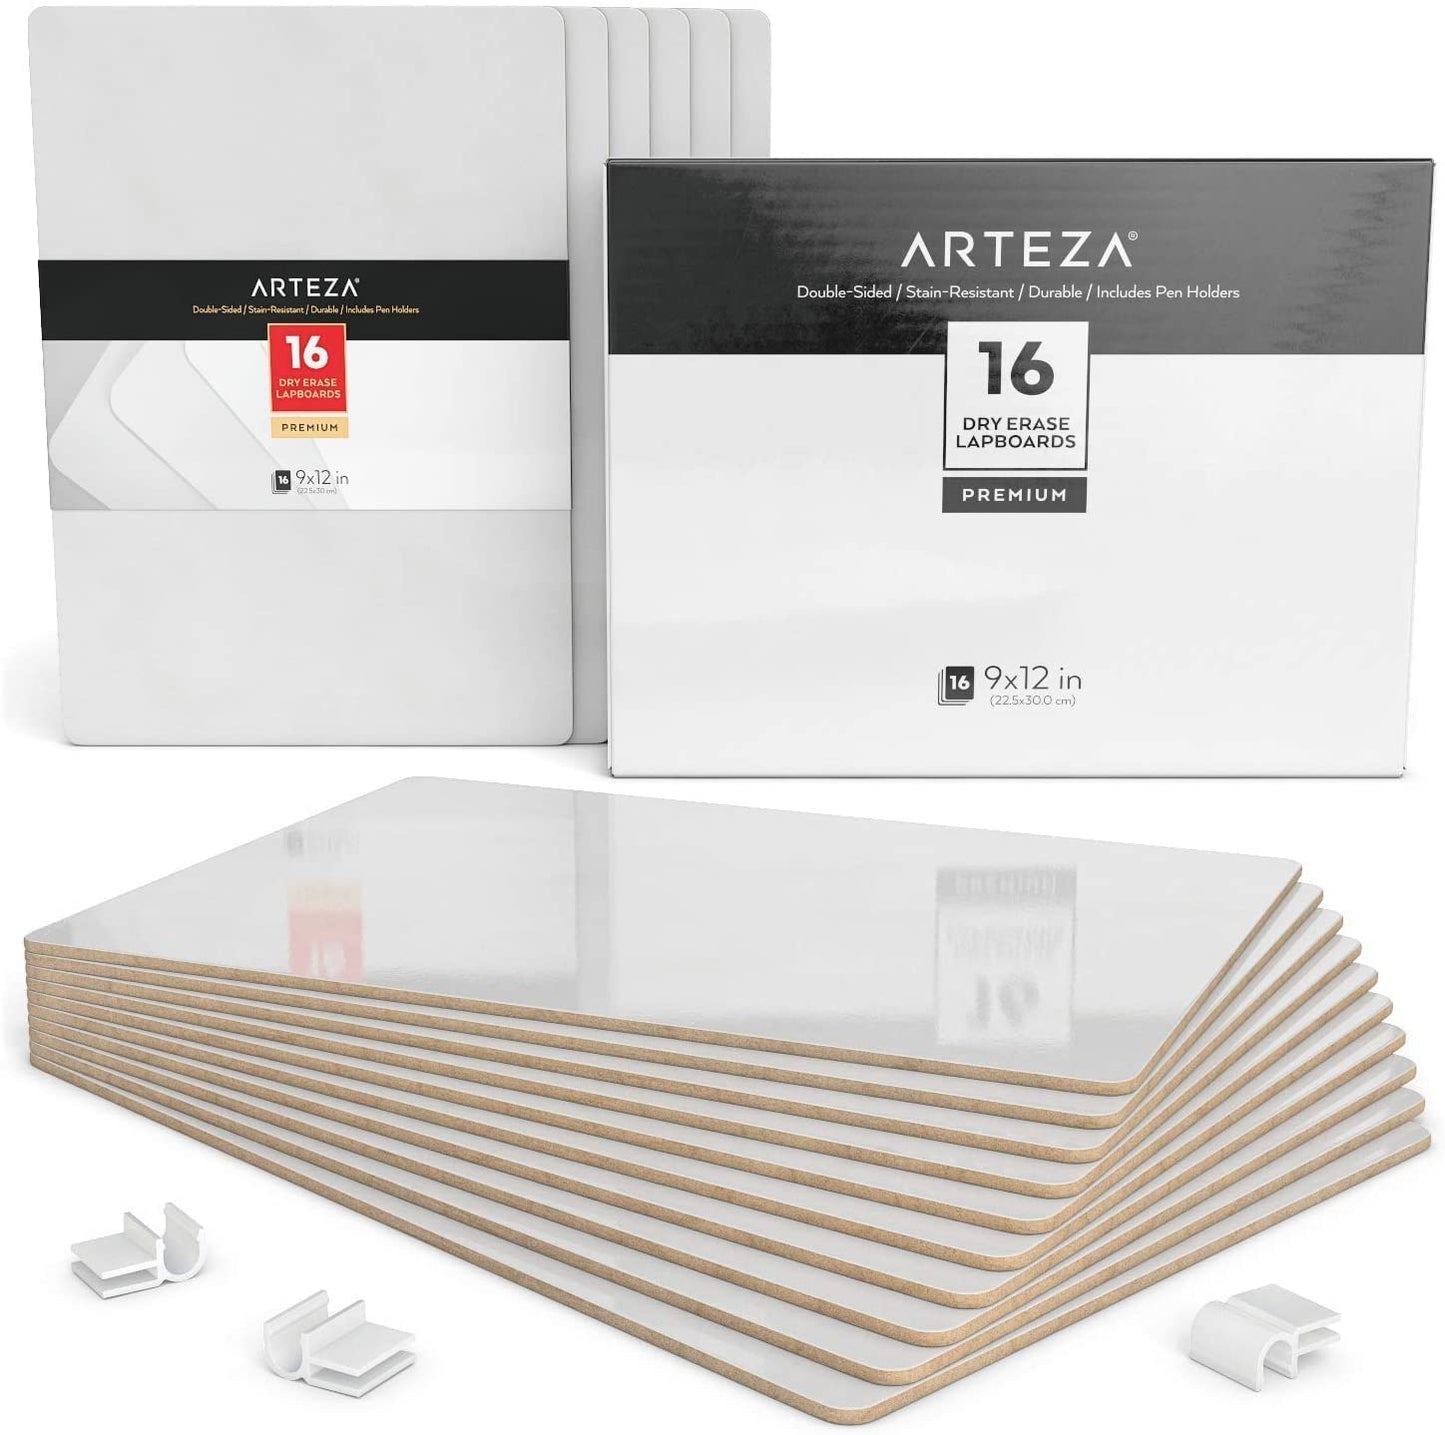 Arteza Dry Erase Lapboards, 9" x 12" - Pack of 16